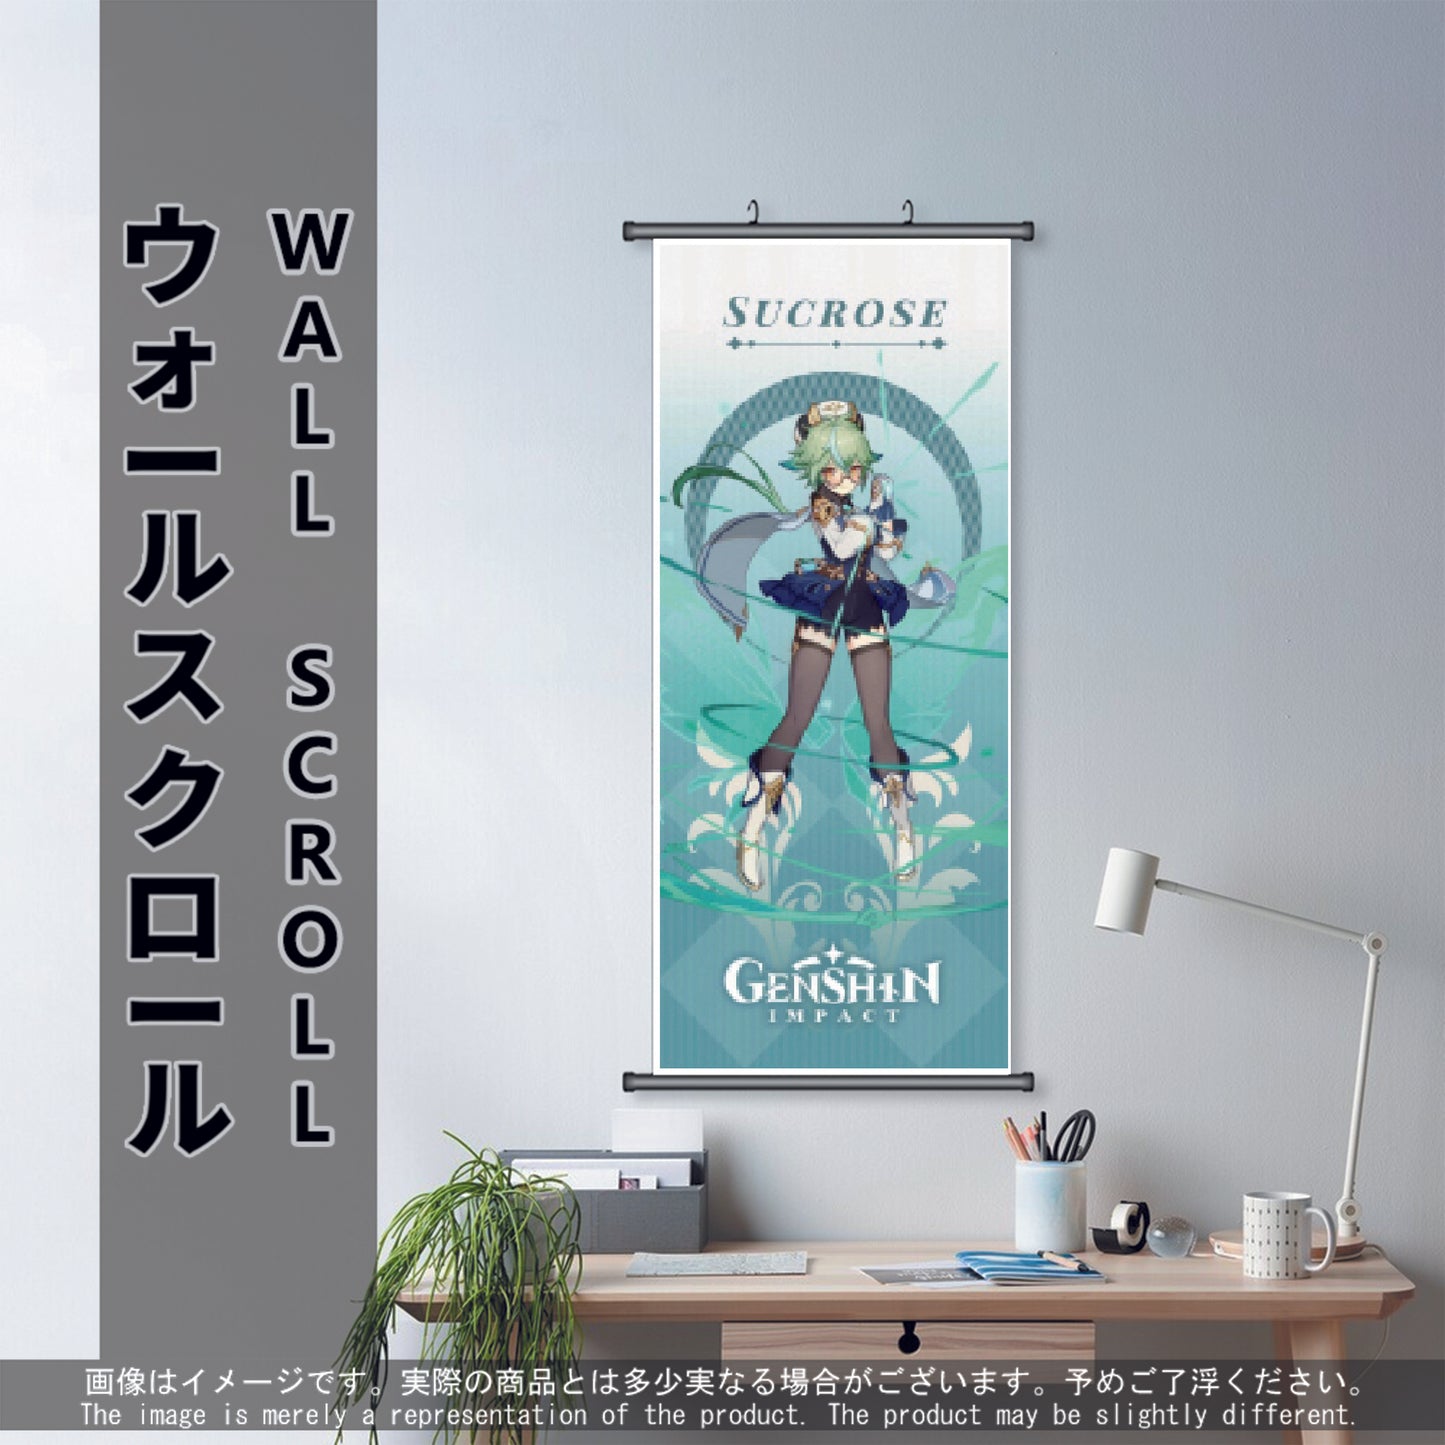 (GSN-ANEMO-02) SUCROSE Genshin Impact Anime Wall Scroll